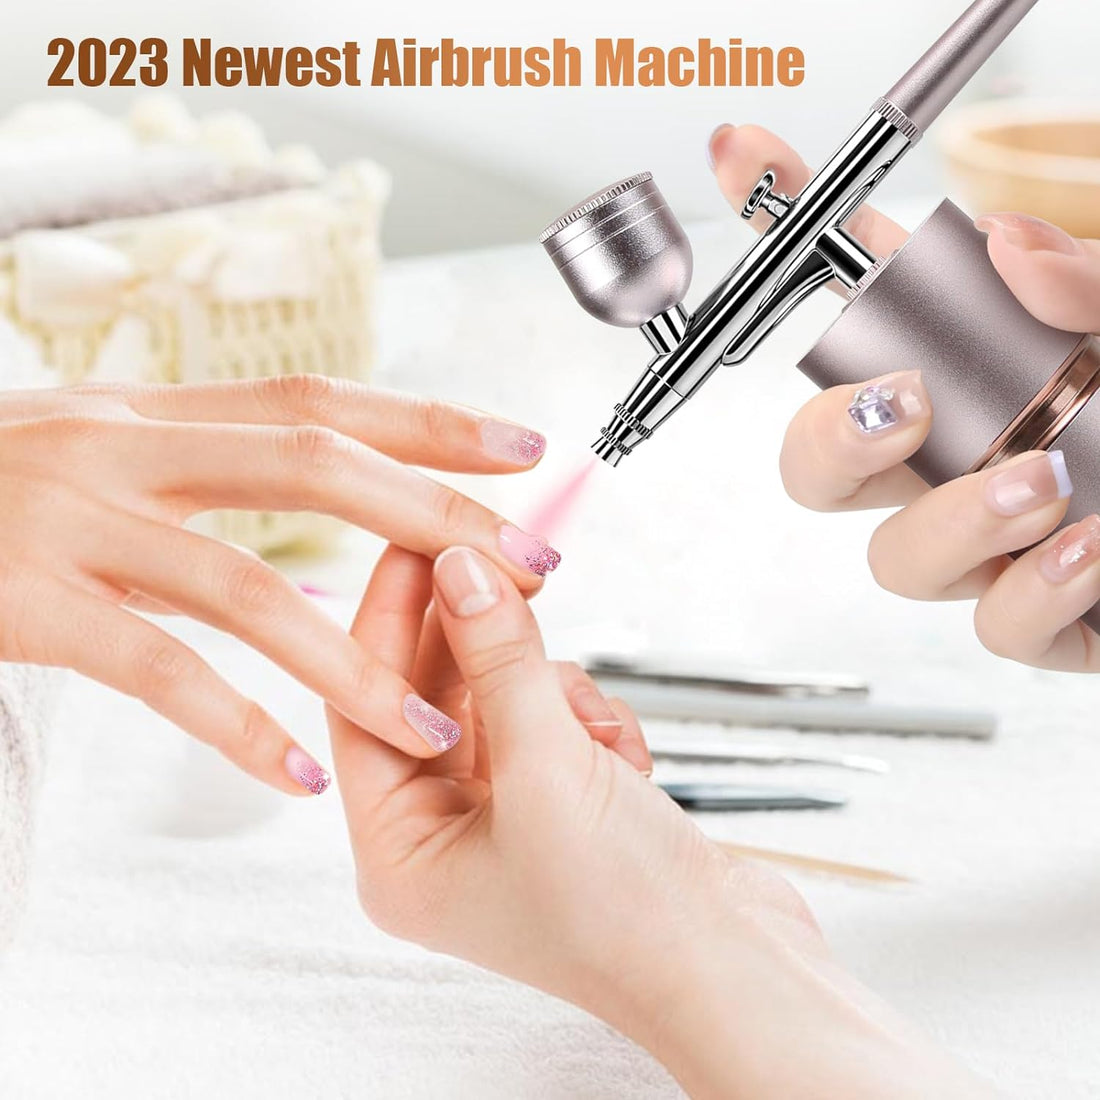 Air-Brush for Nails 36PSI High-Pressure Cordless Airbrush-Kit - Handheld Mini Airbrush Compressor Rechargeable air Brush kit for Model Painting, Makeup,Cake Decor